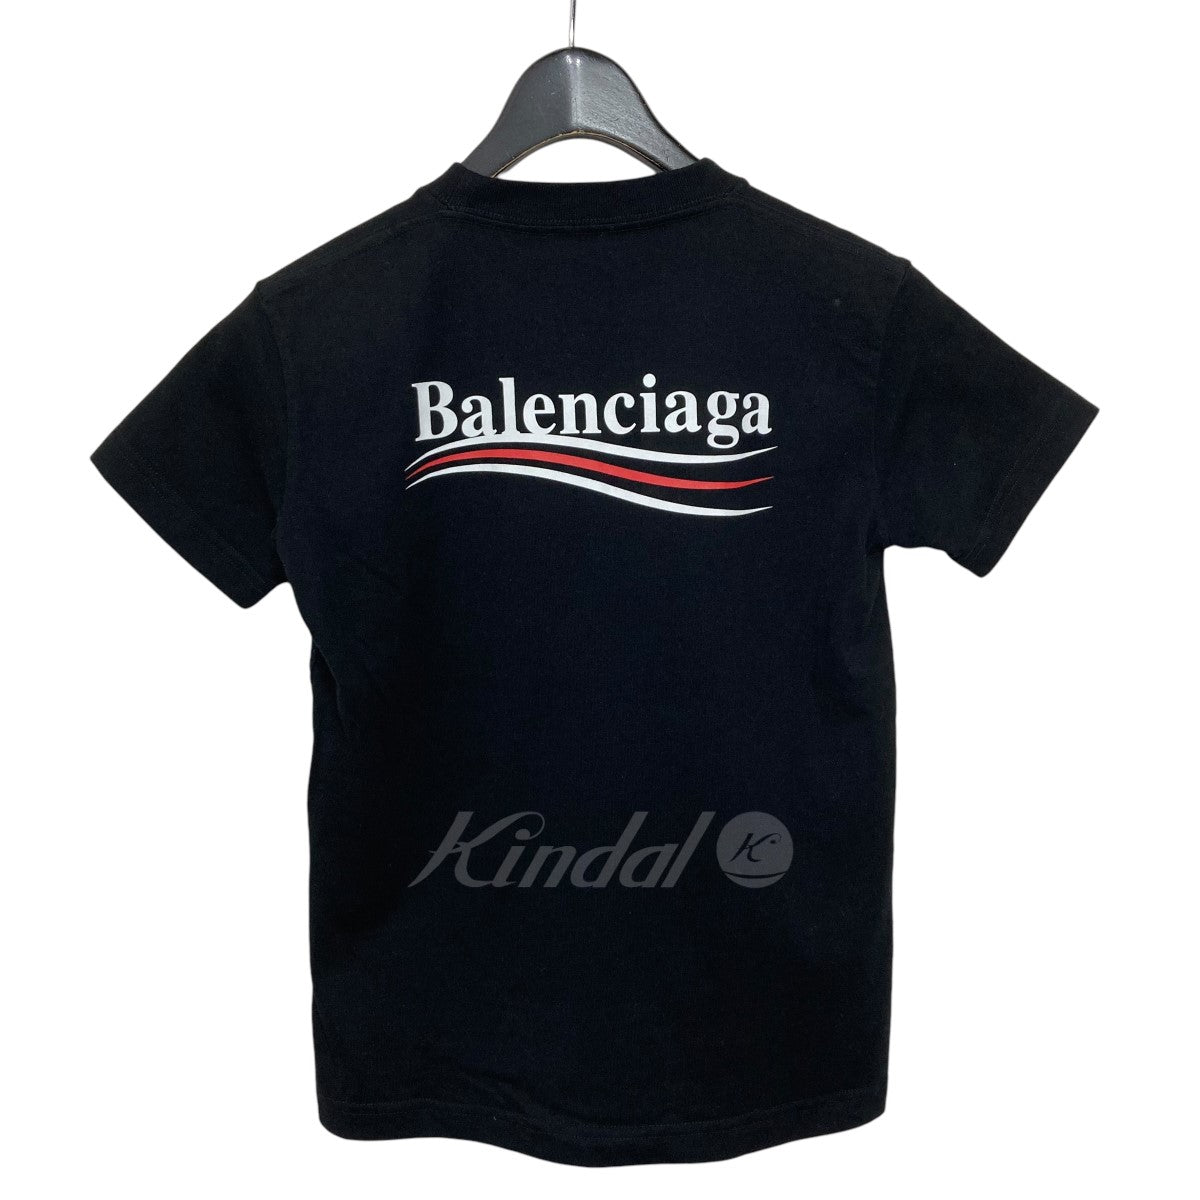 BALENCIAGA(バレンシアガ) ロゴTシャツ 612964 ブラック サイズ 14 